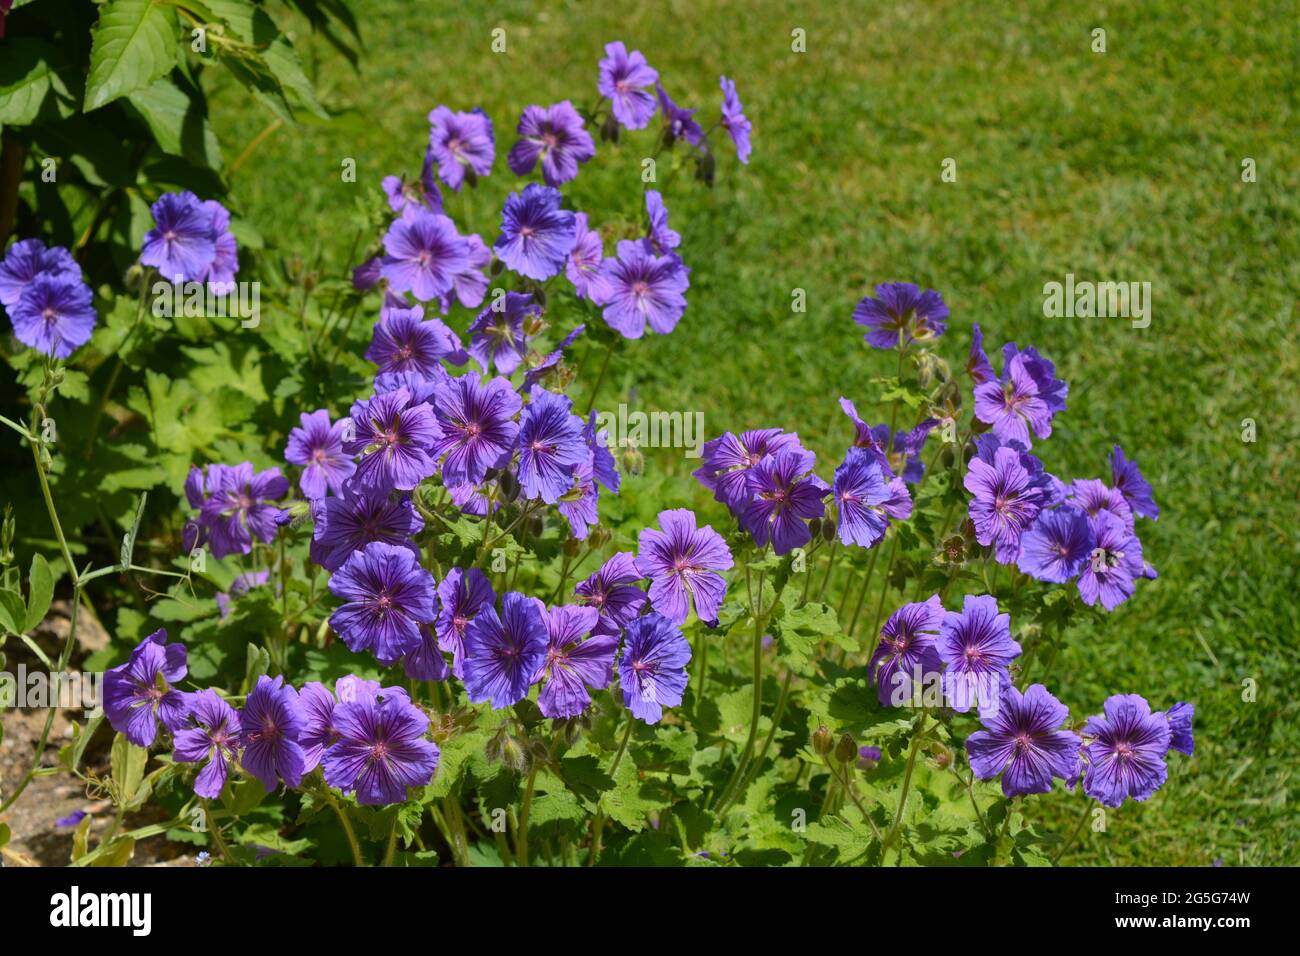 Hardy geranium, or Cranesbill magnificum Rosemoor, plant with delicate  purple flowers in a summer garden border Stock Photo